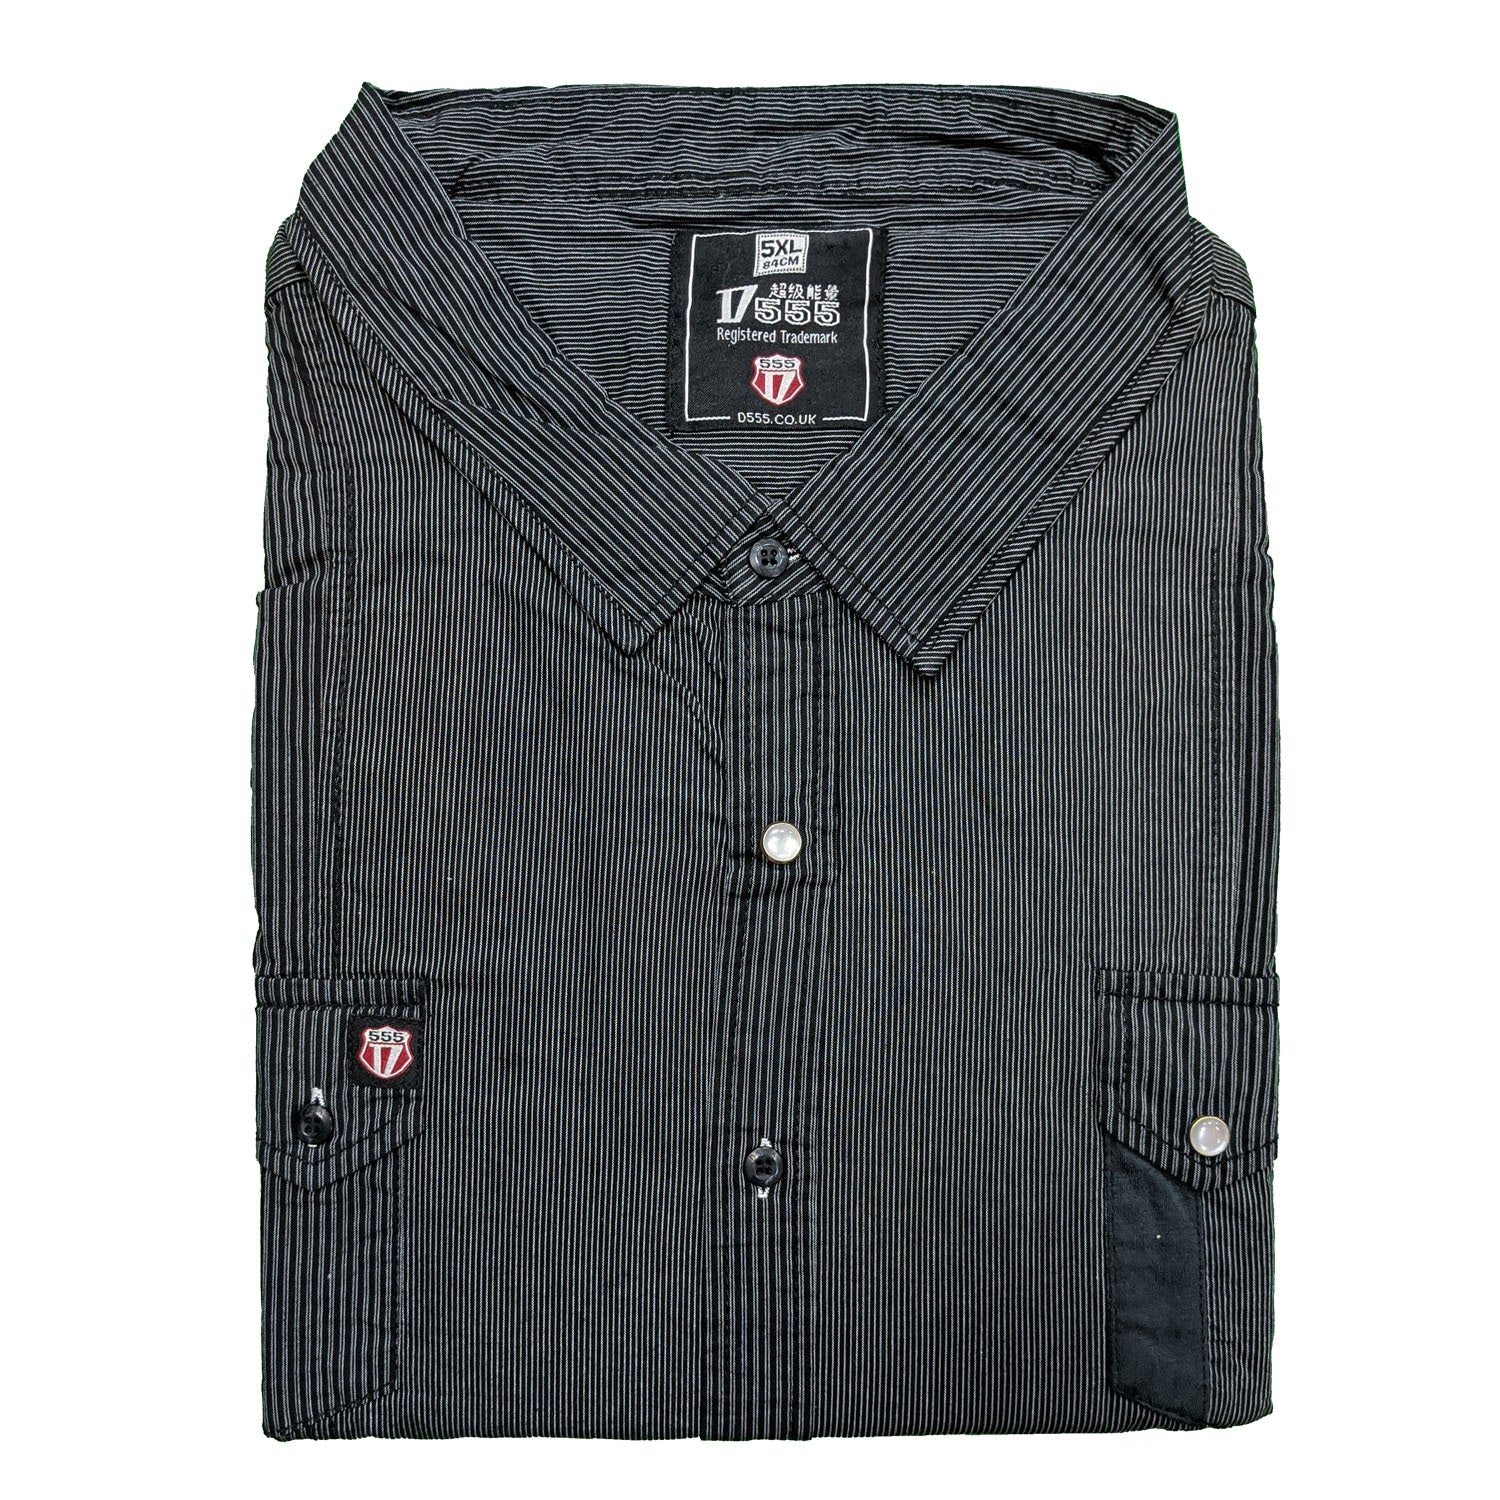 D555 S/S Shirt - KS1036 - Arrigo - Black / Grey 1